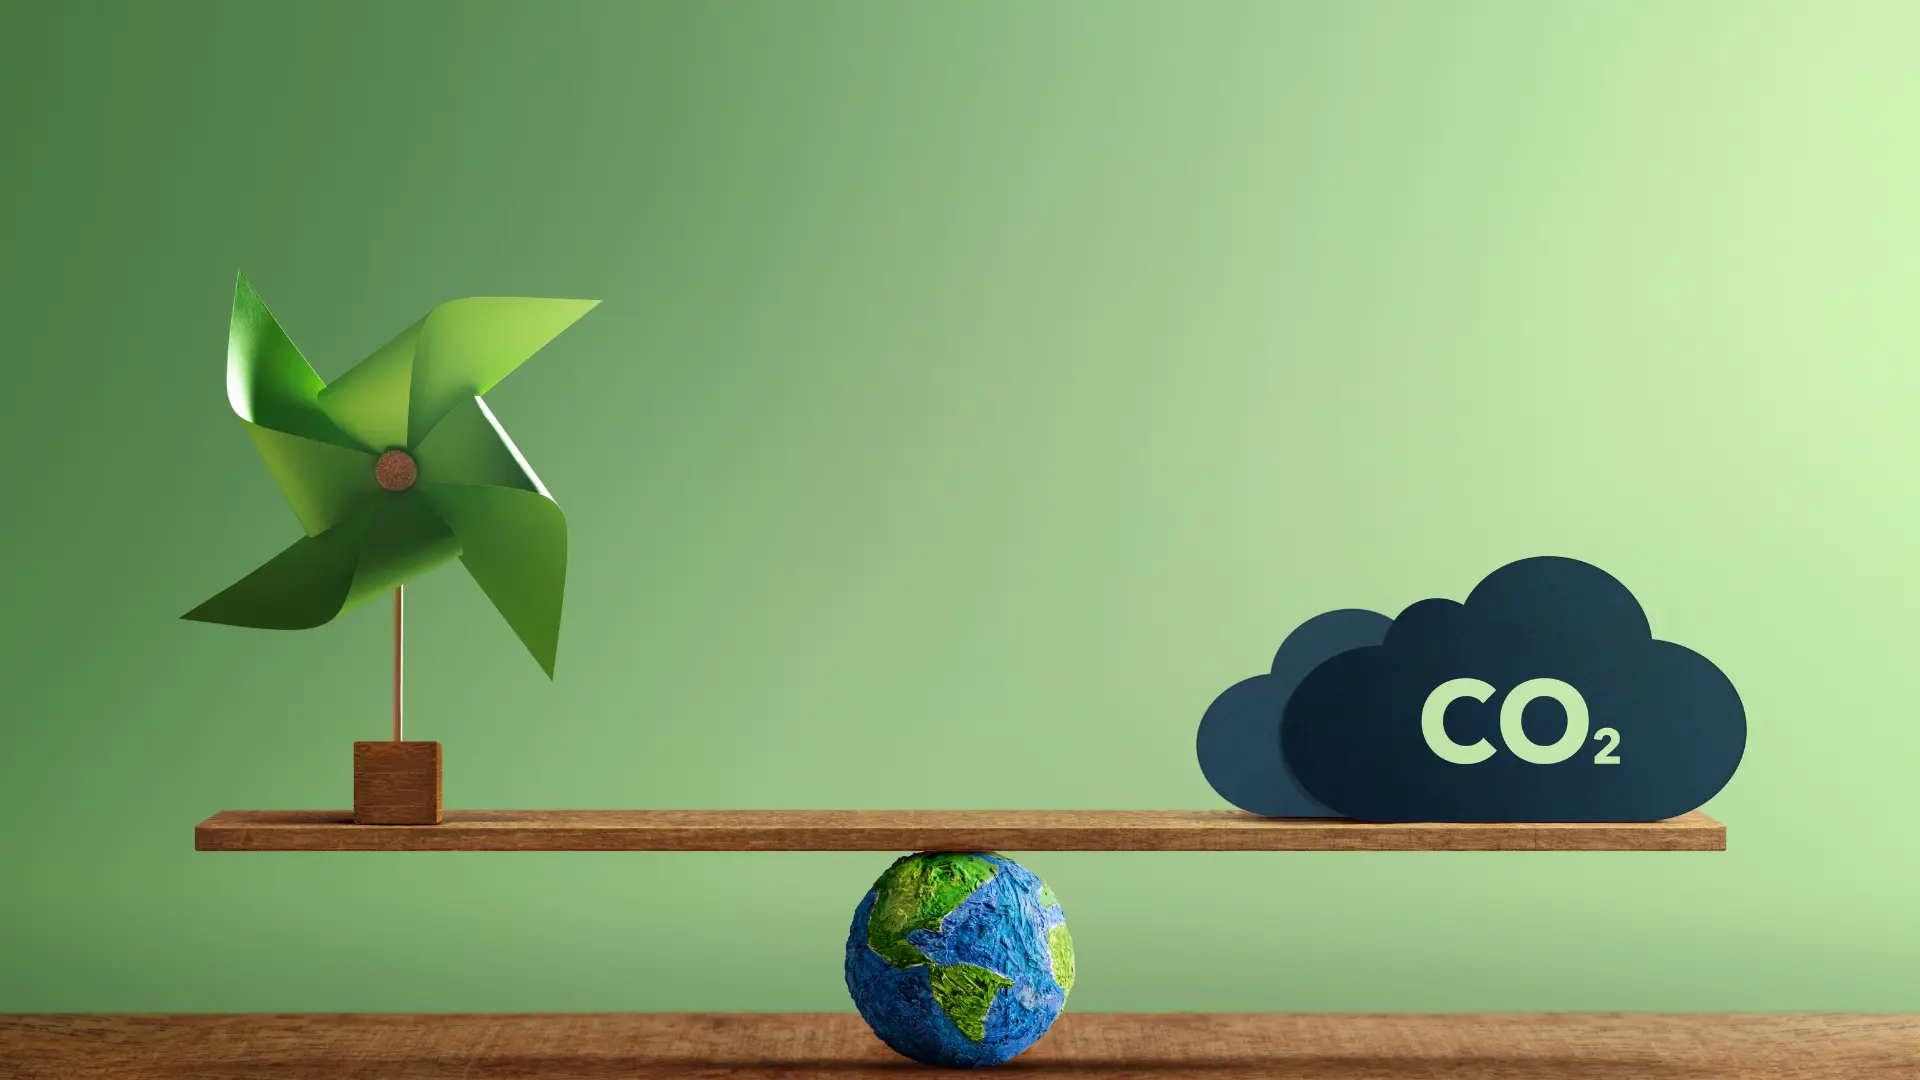 Green pinwheel, globe, 'CO2' cloud balancing on seesaw